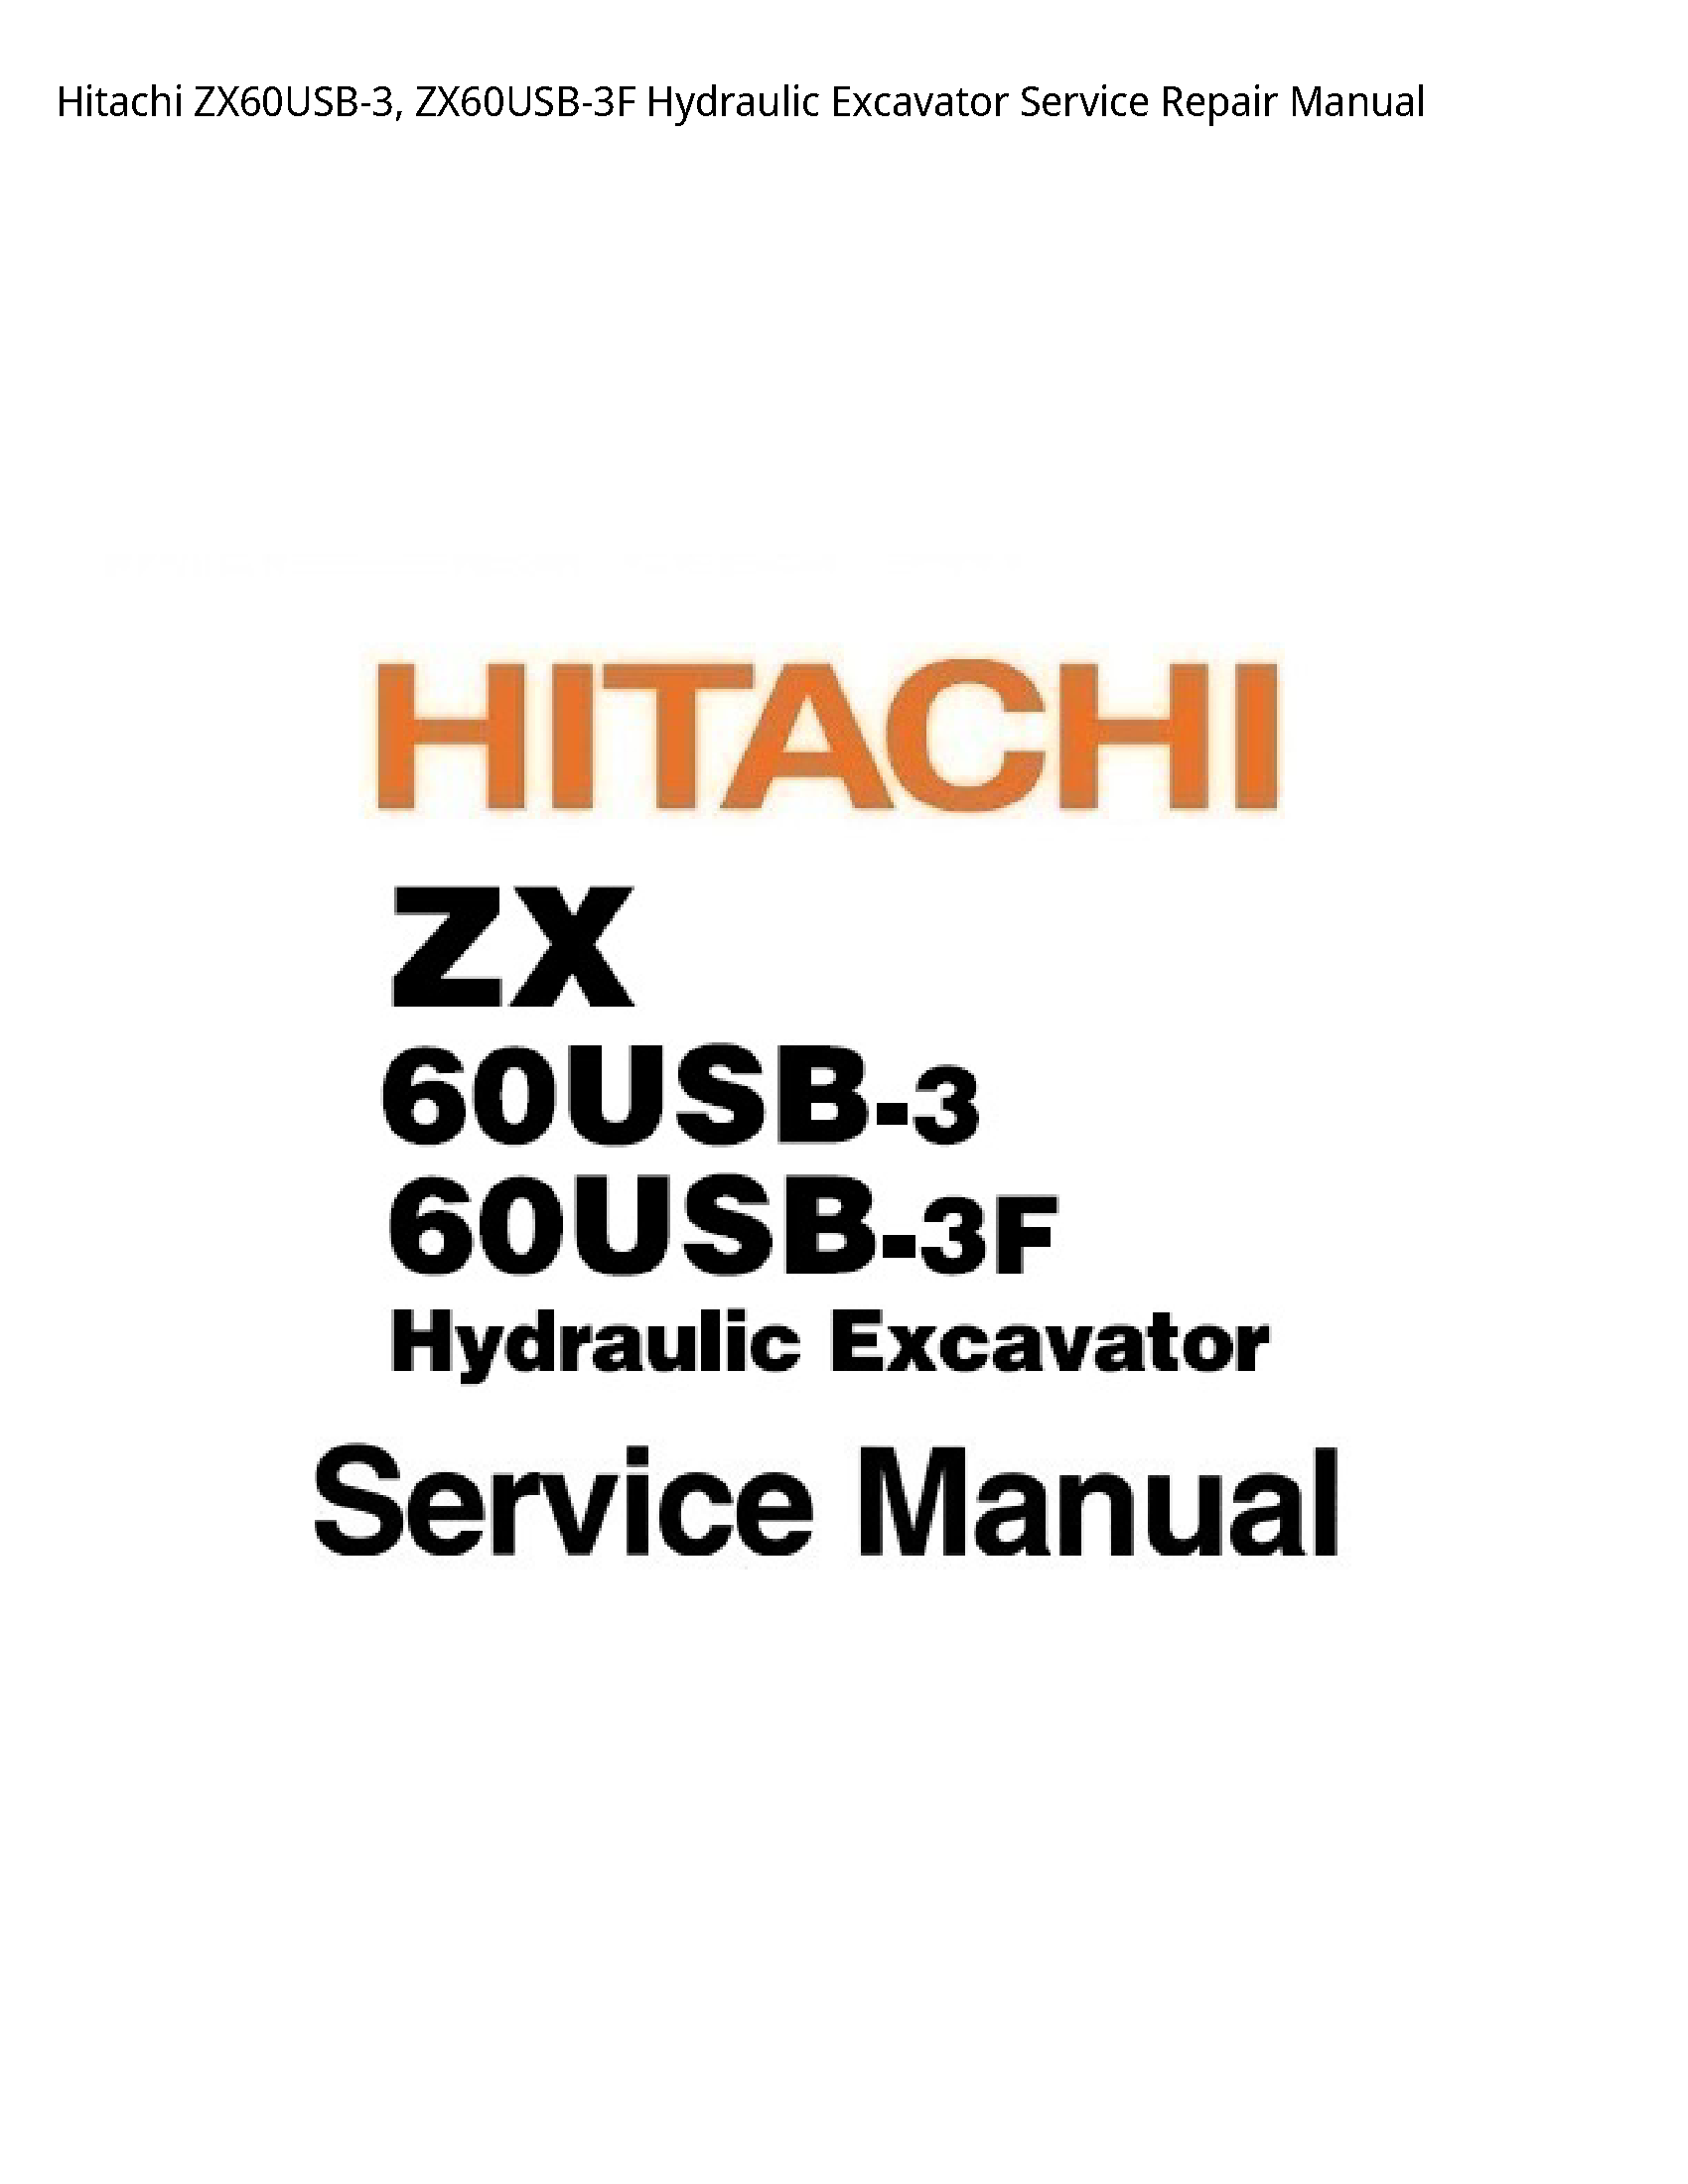 Hitachi ZX60USB-3 Hydraulic Excavator manual